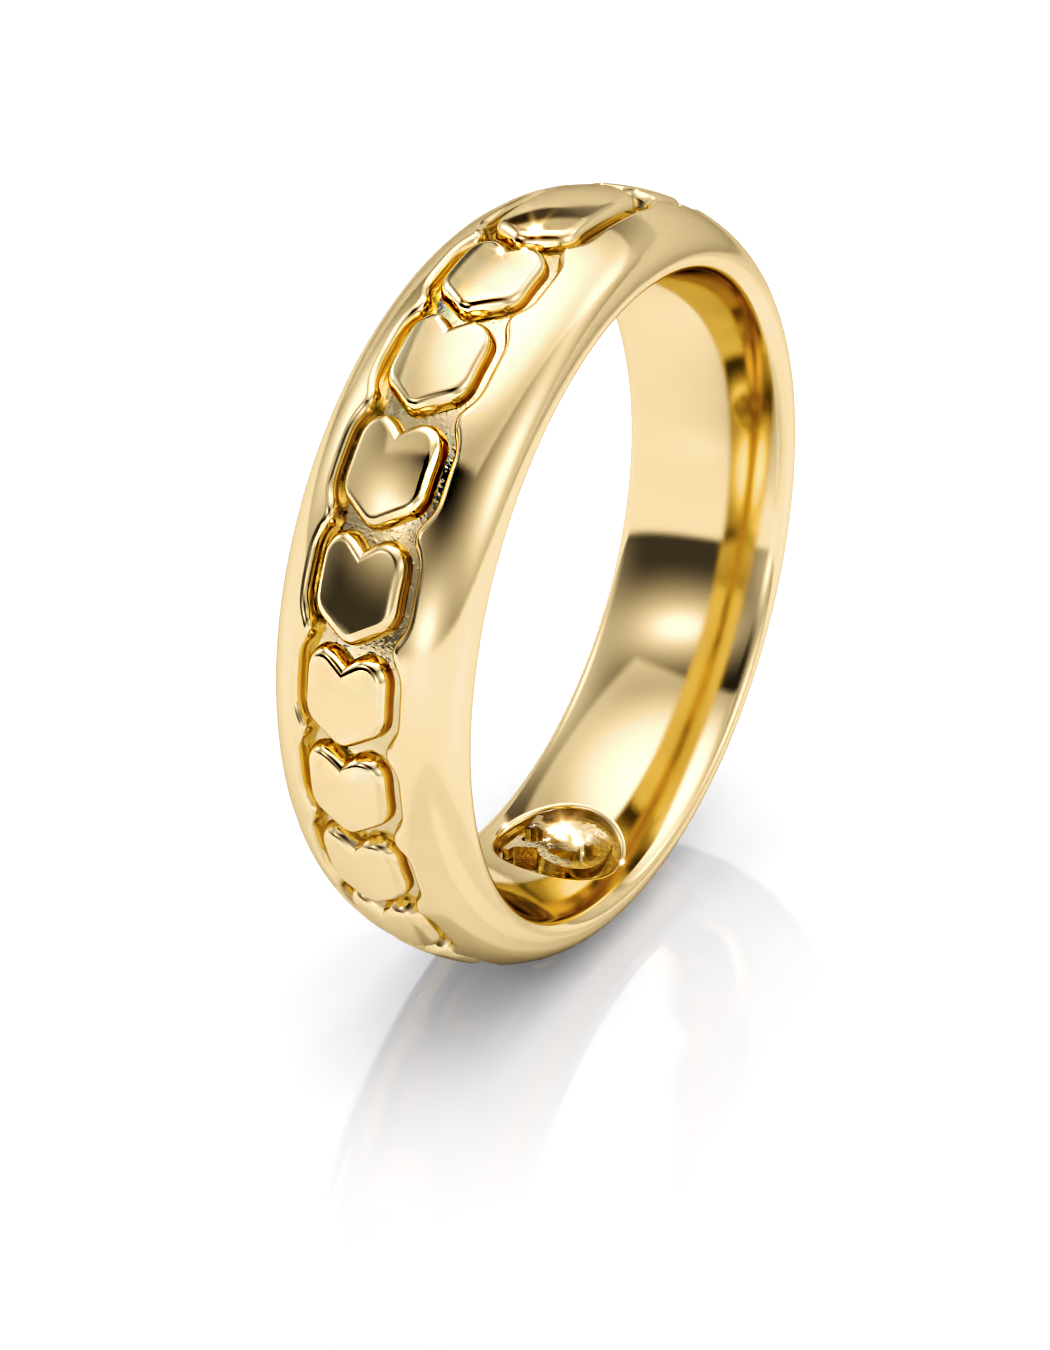 Serendipity Ring 14k / 18k Gold - 6mm width